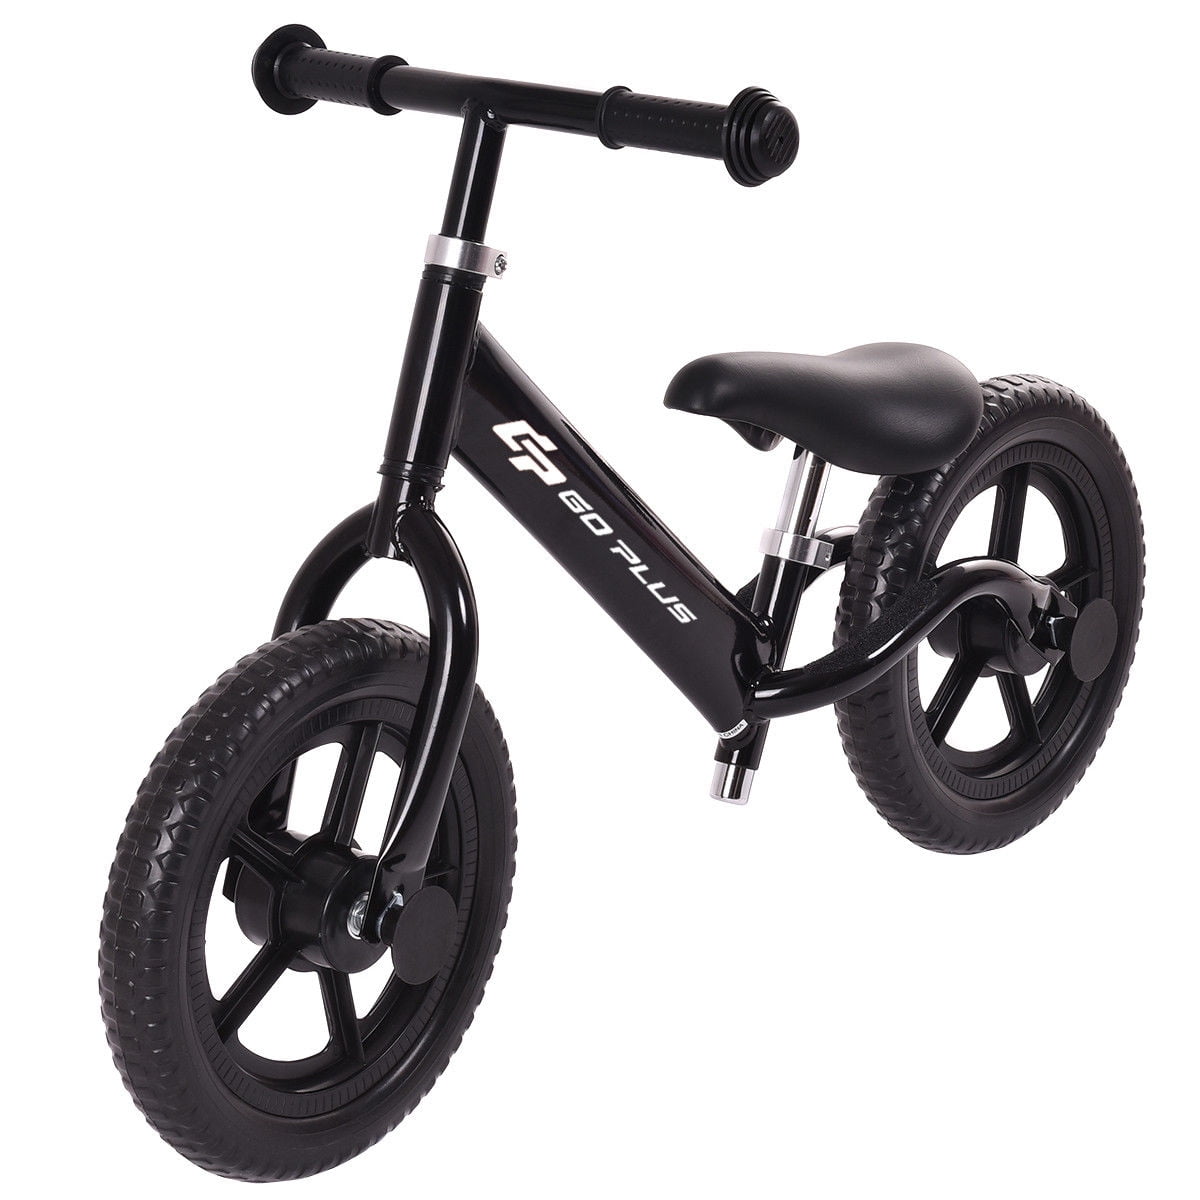 12'' Kids Balance Training Bike No-Pedal Learn Ride Pre Push Bicycle Adjustable 